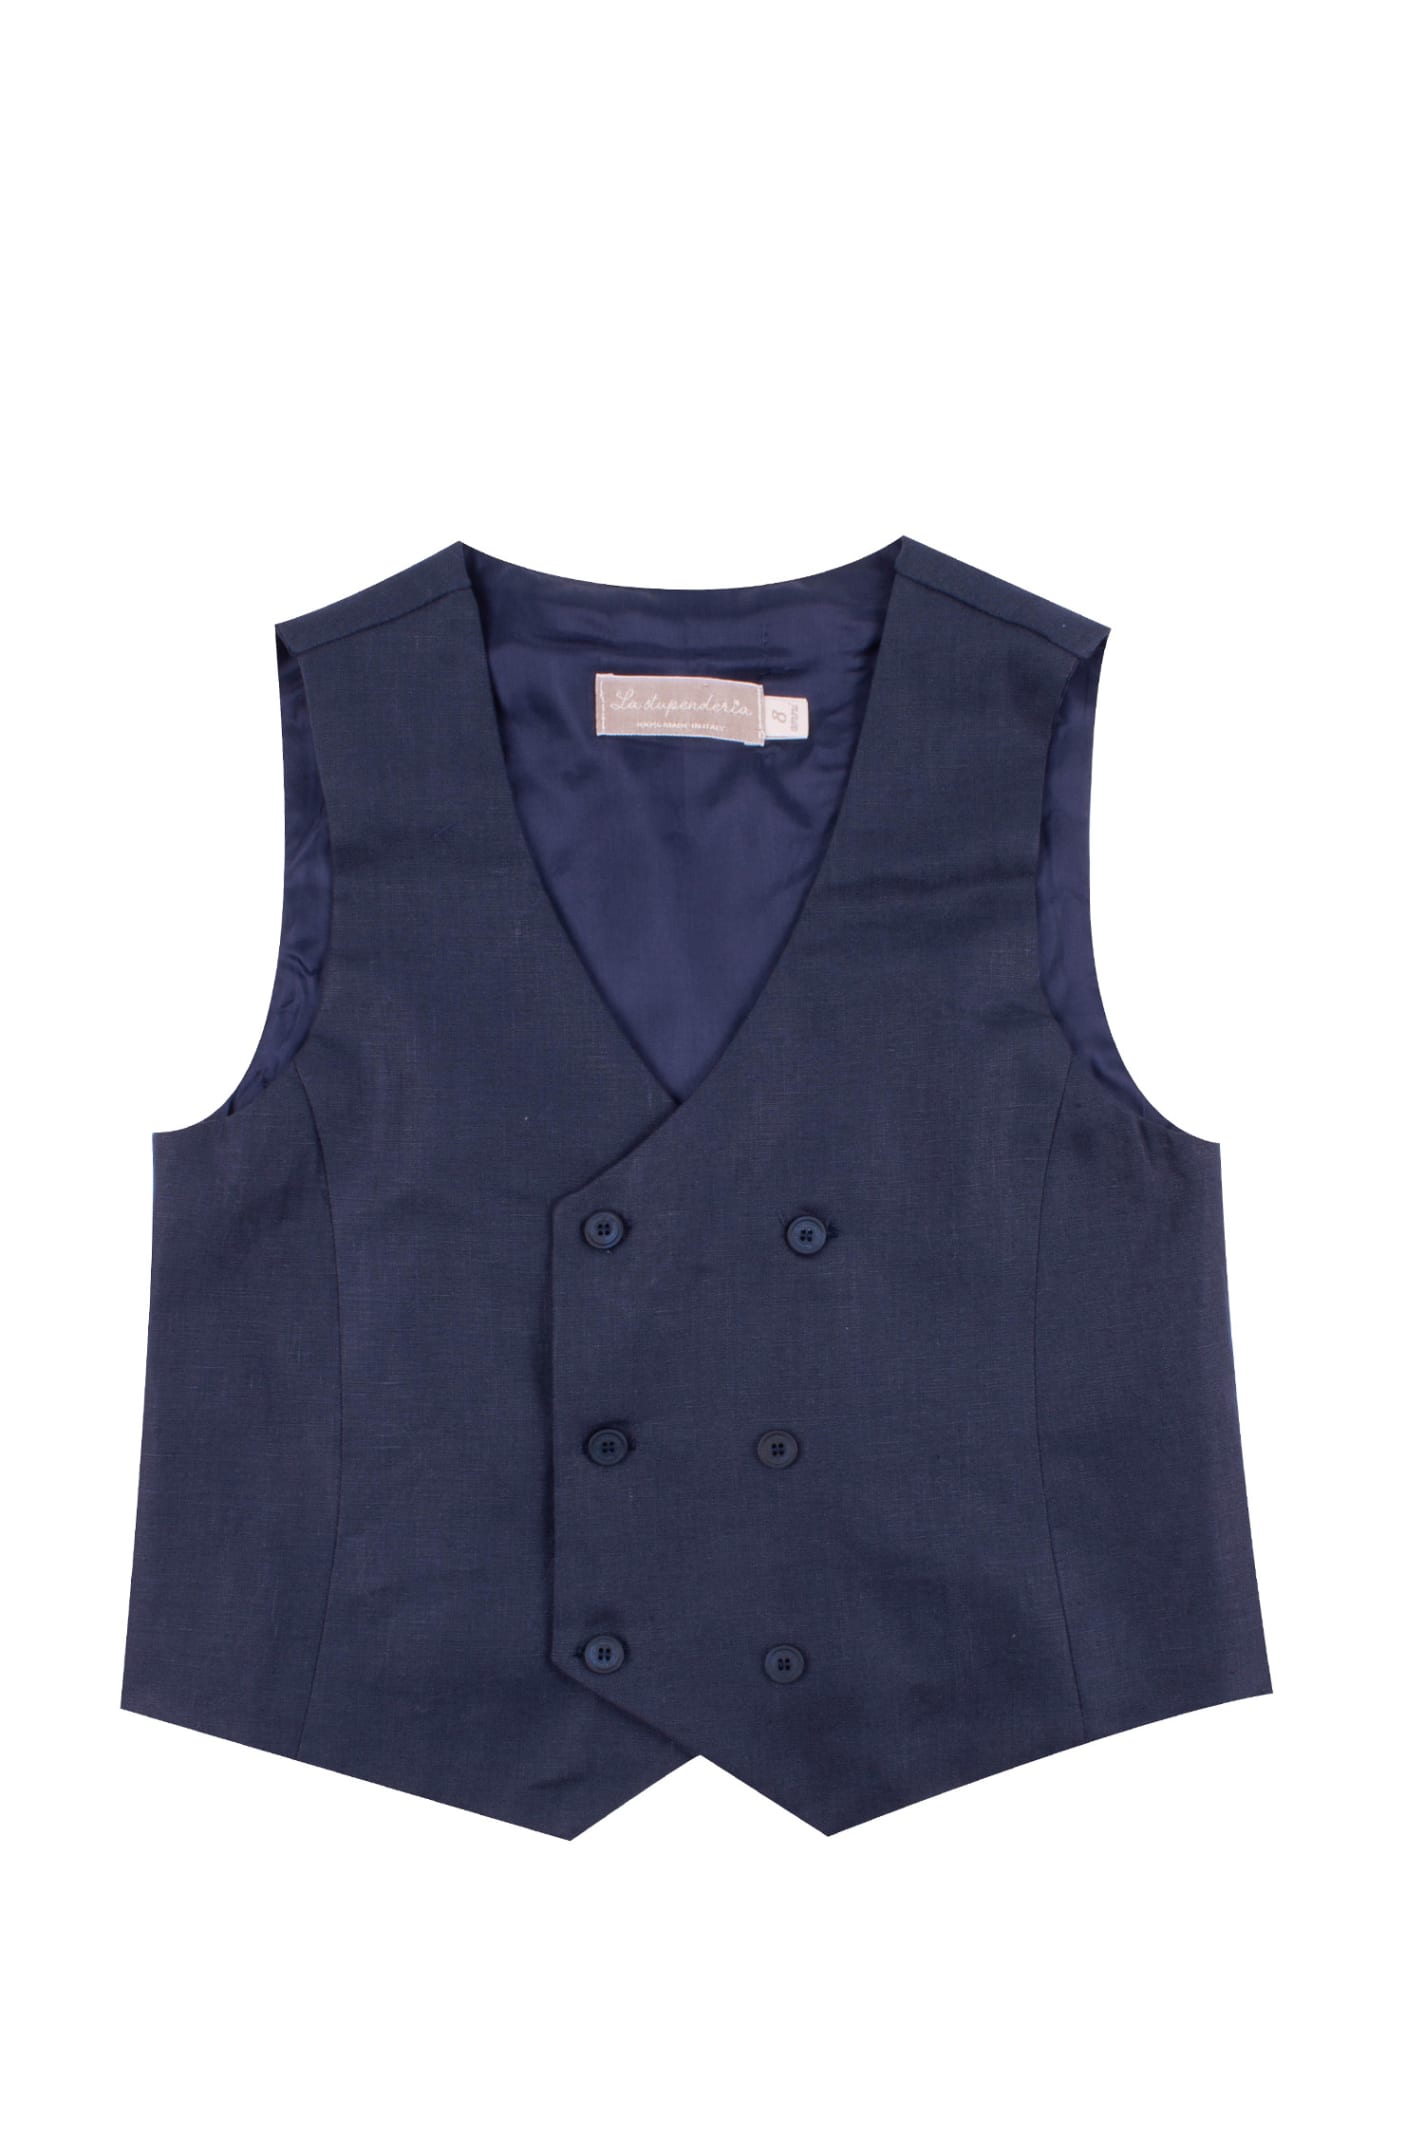 La Stupenderia Kids' Linen Vest In Blue